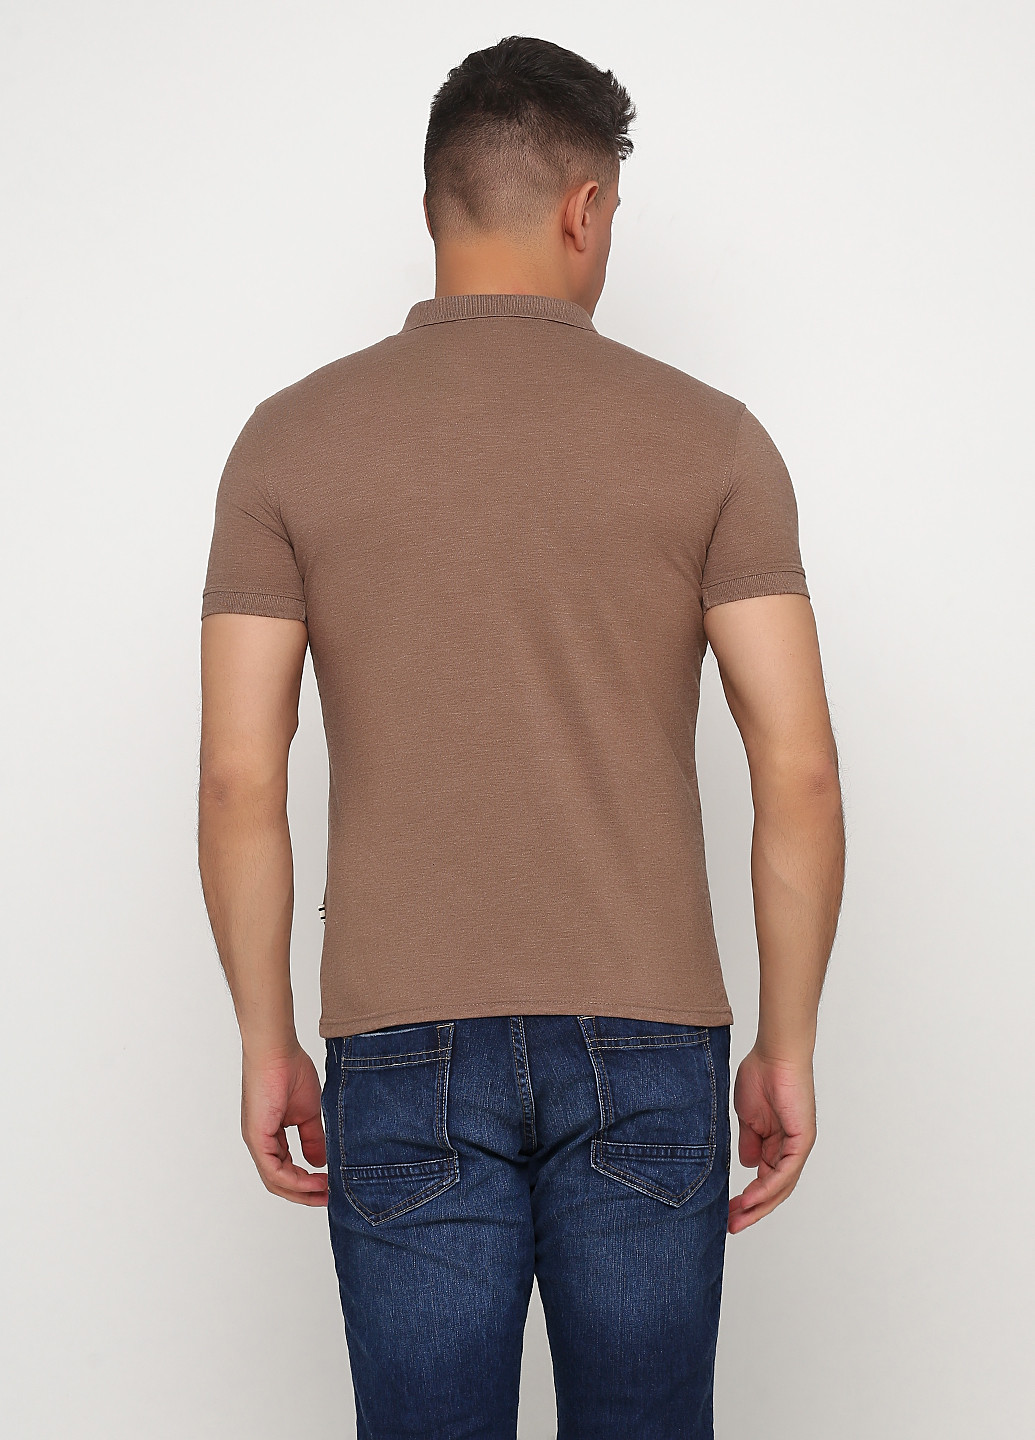 Бежевая футболка-поло для мужчин Tailored Originals меланжевая